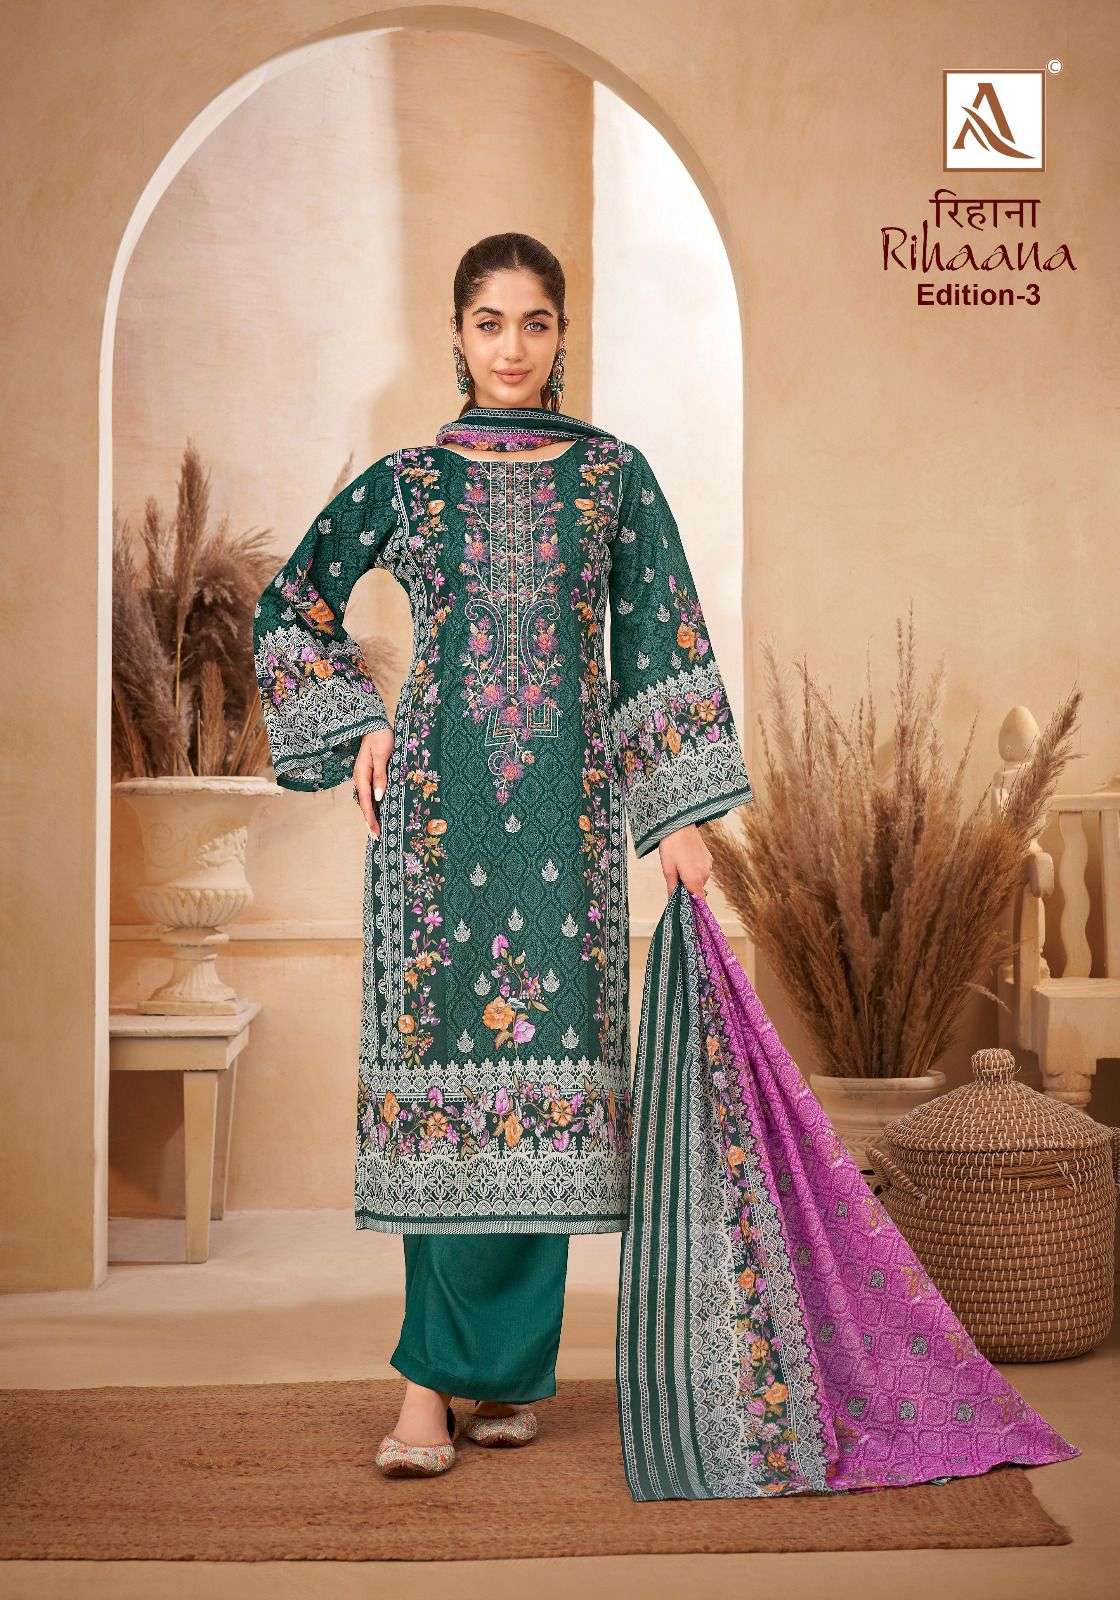 rihaana edition vol-3 by alok suit pure cambric cotton pakistani print salwar suits catalogue surat gujarat